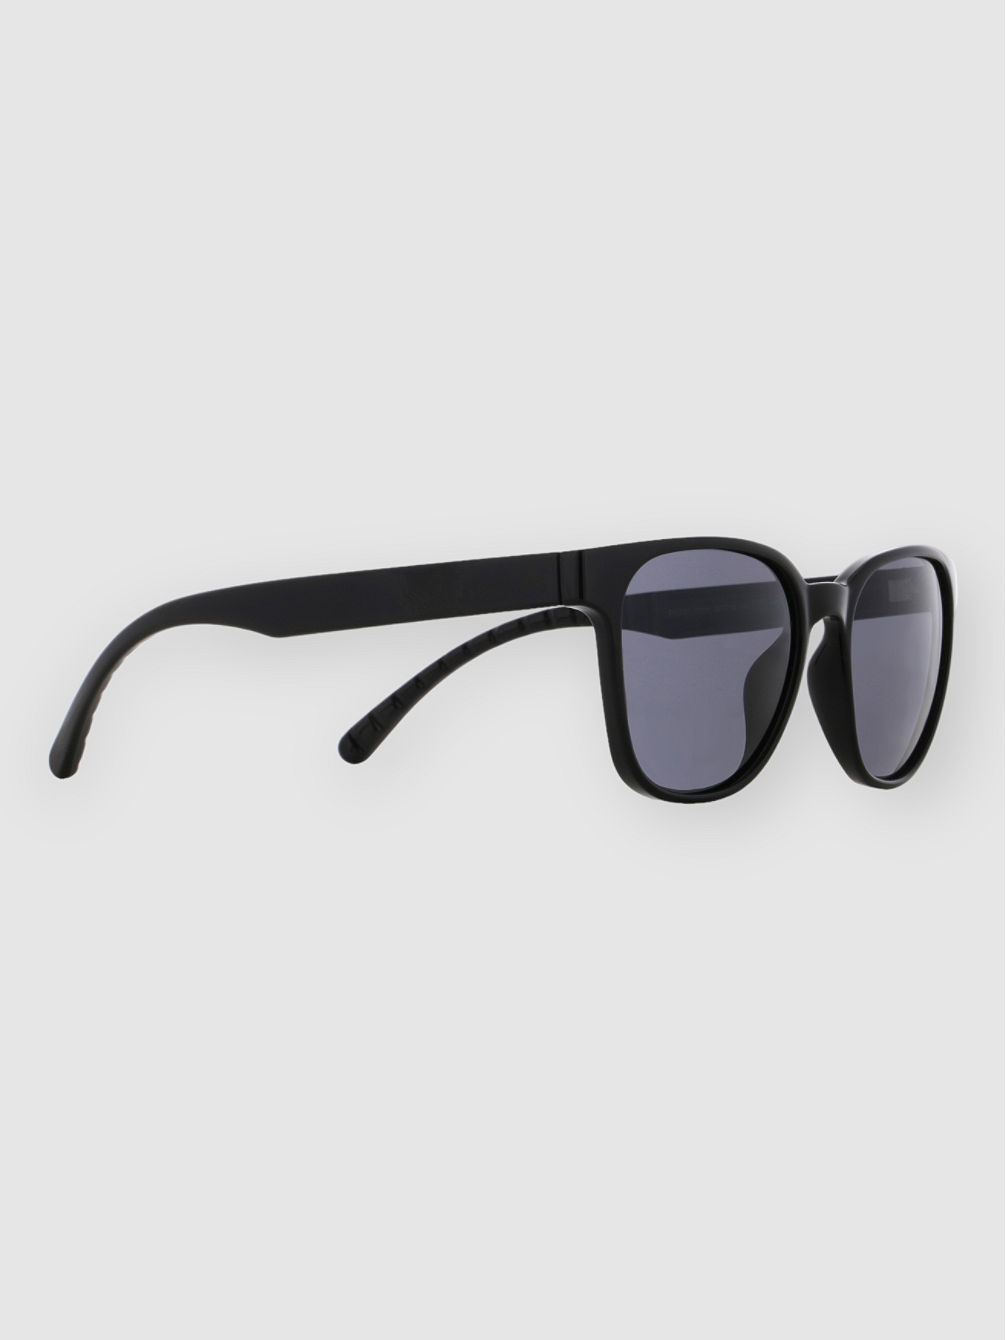 EMERY-001P Black Sunglasses